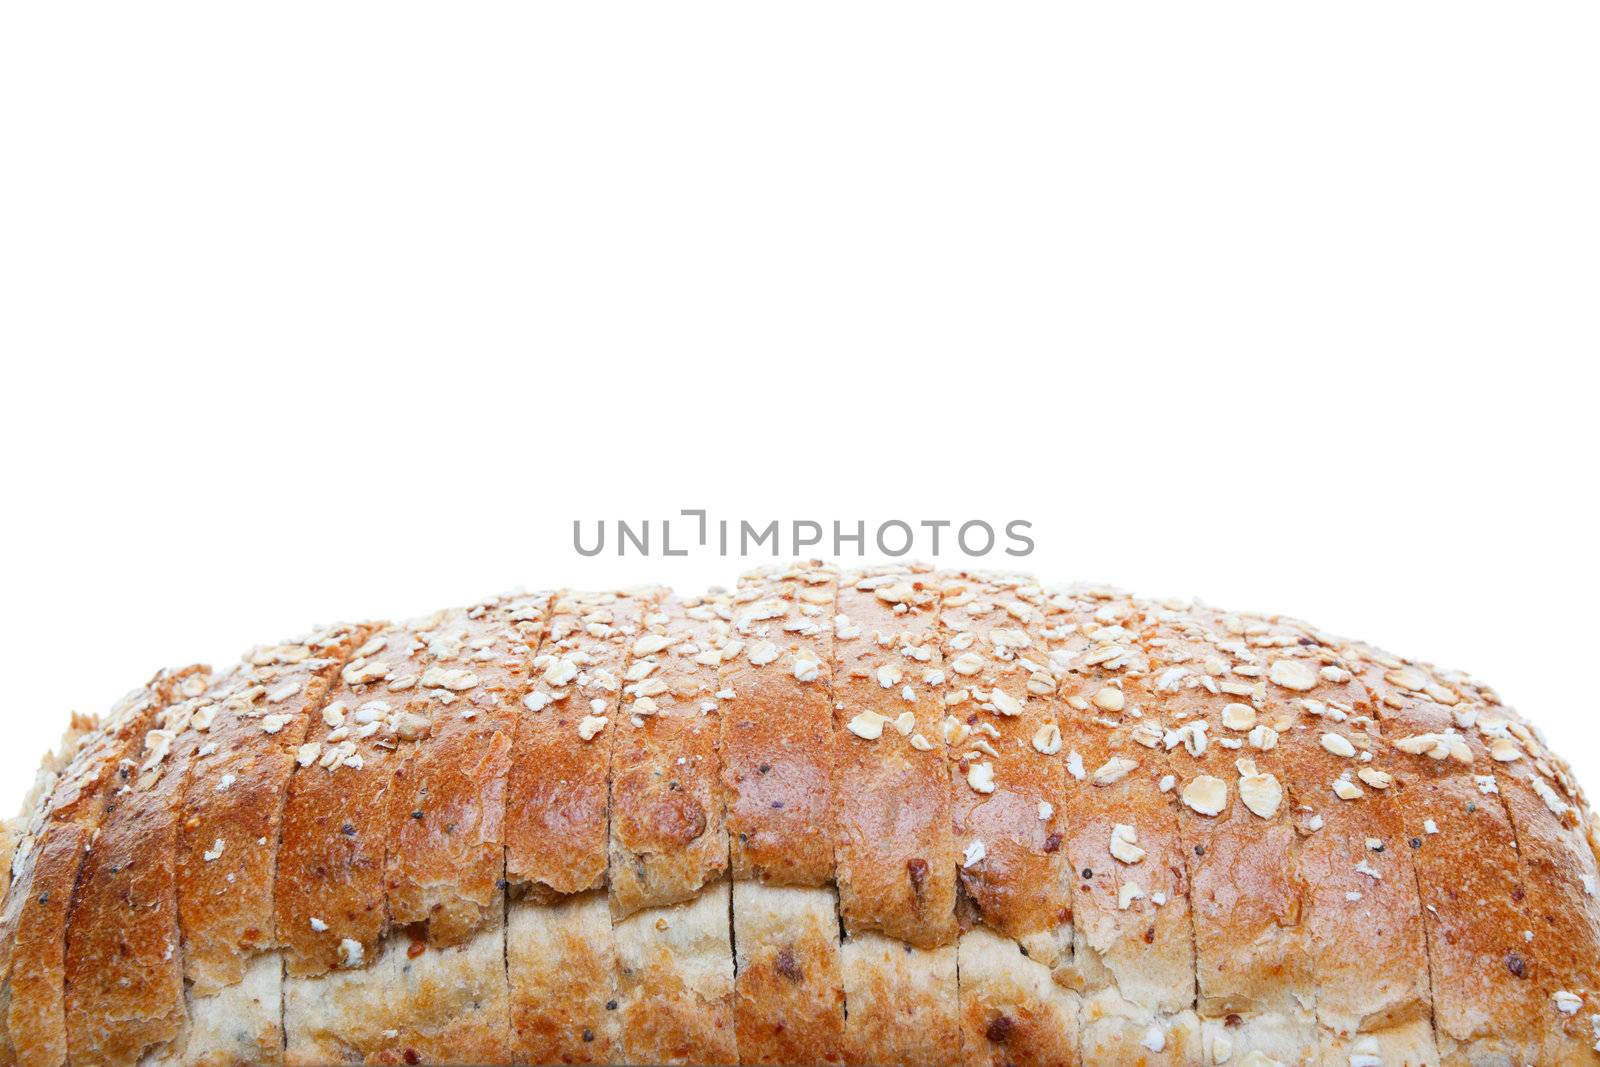 Whole Grain Bread by songbird839